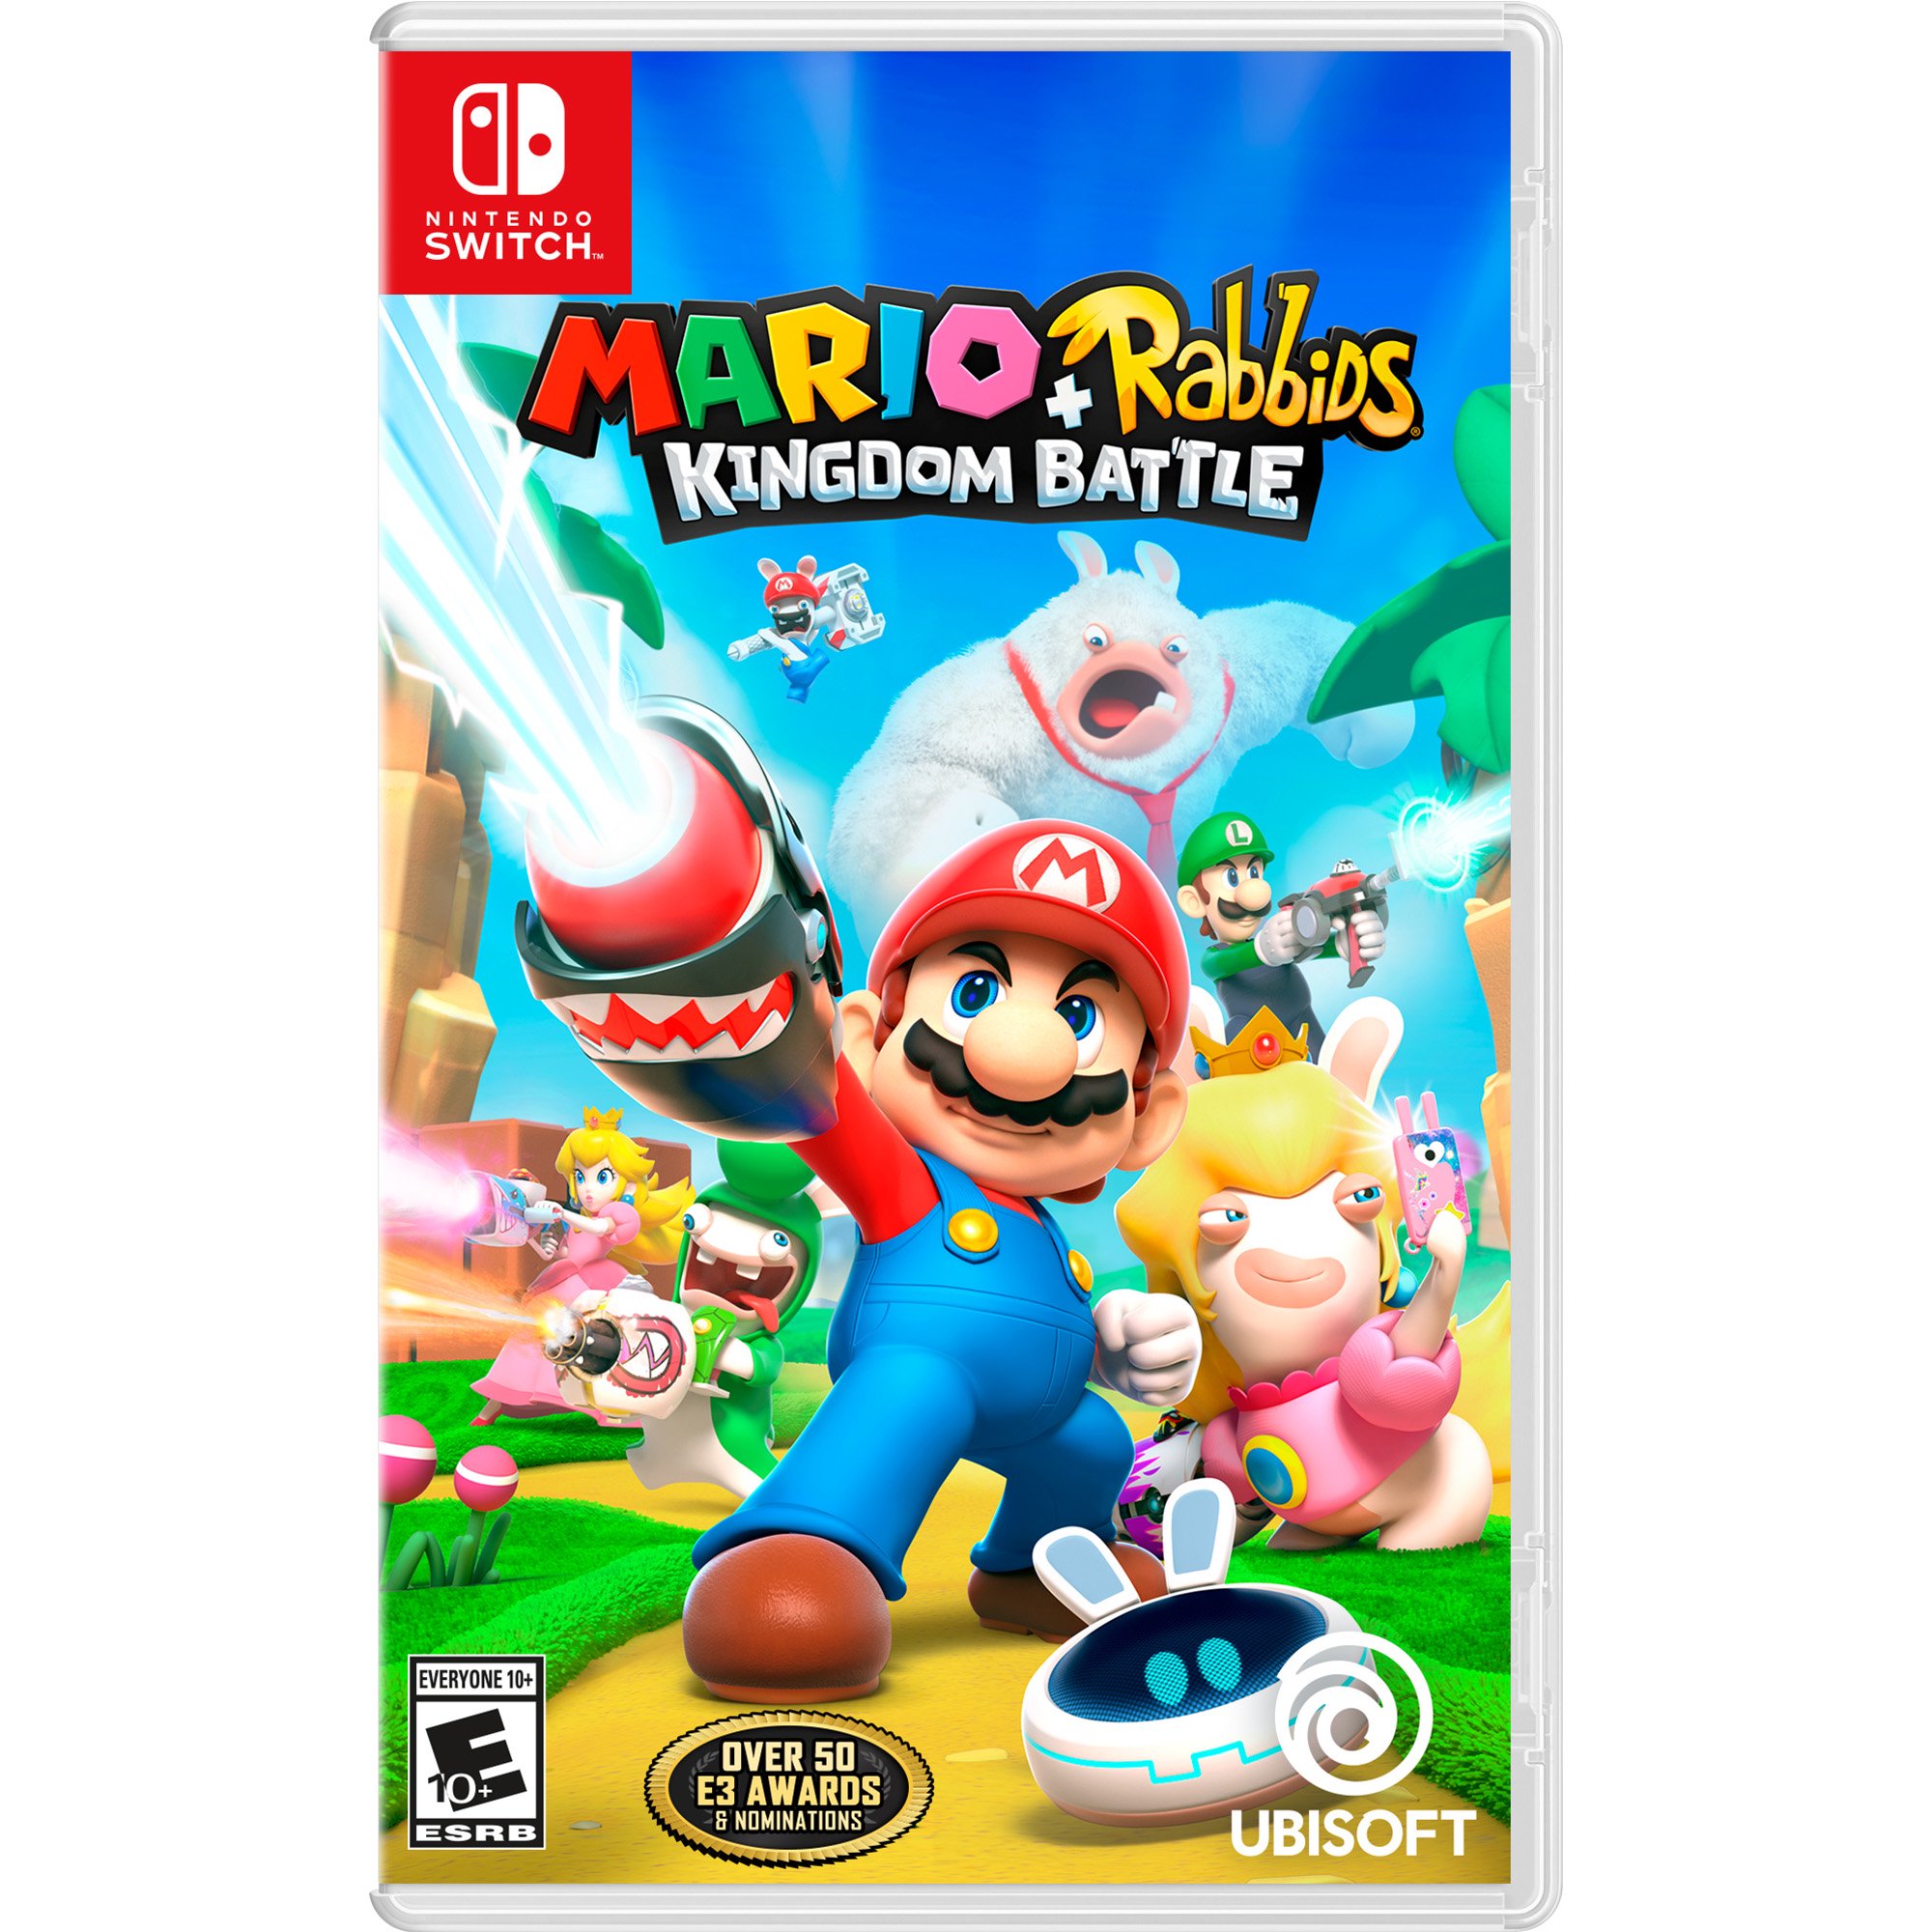 Mario + Rabbids Kingdom Battle game artwork.